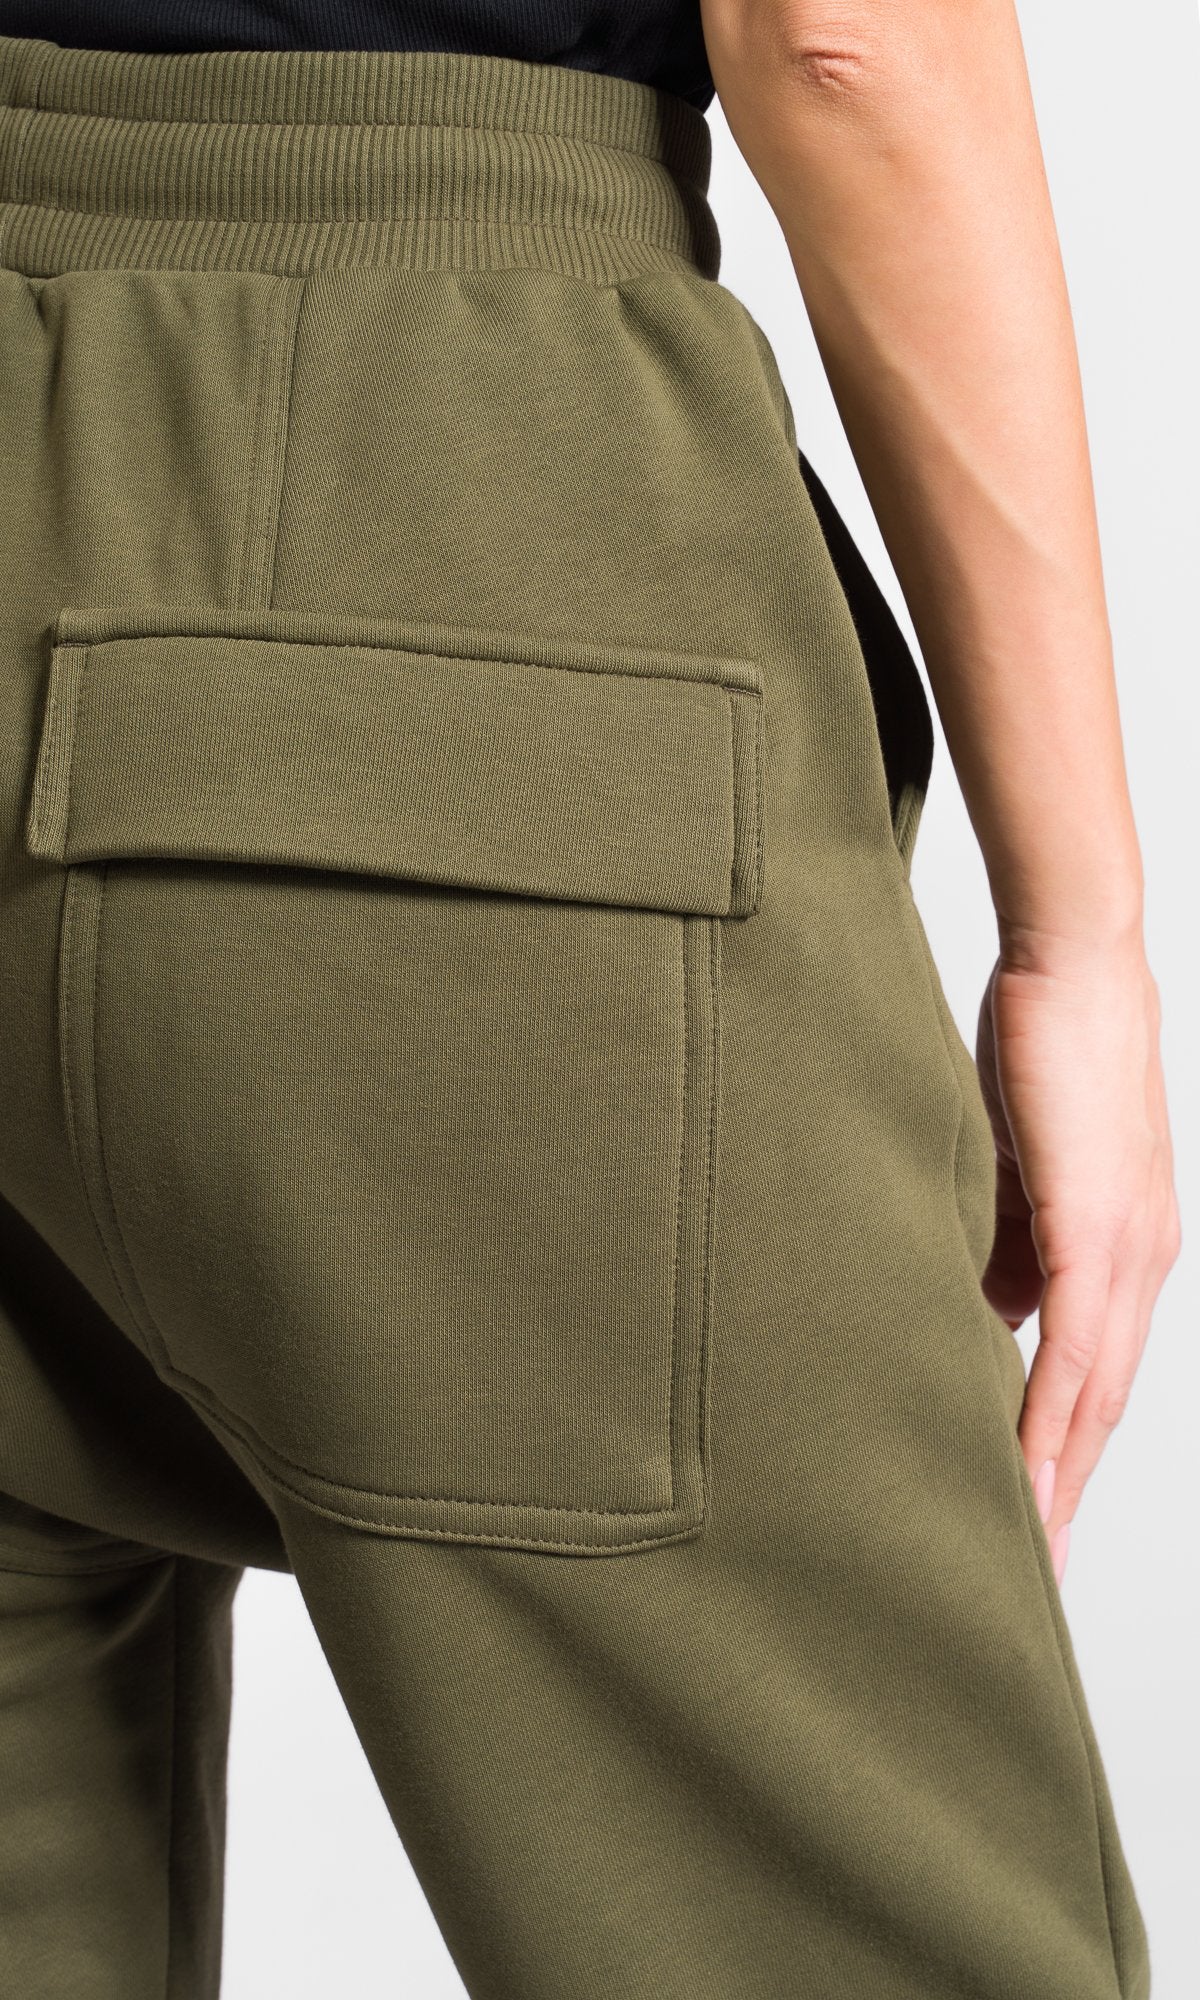 Drop Crotch Pants with Flap Pockets